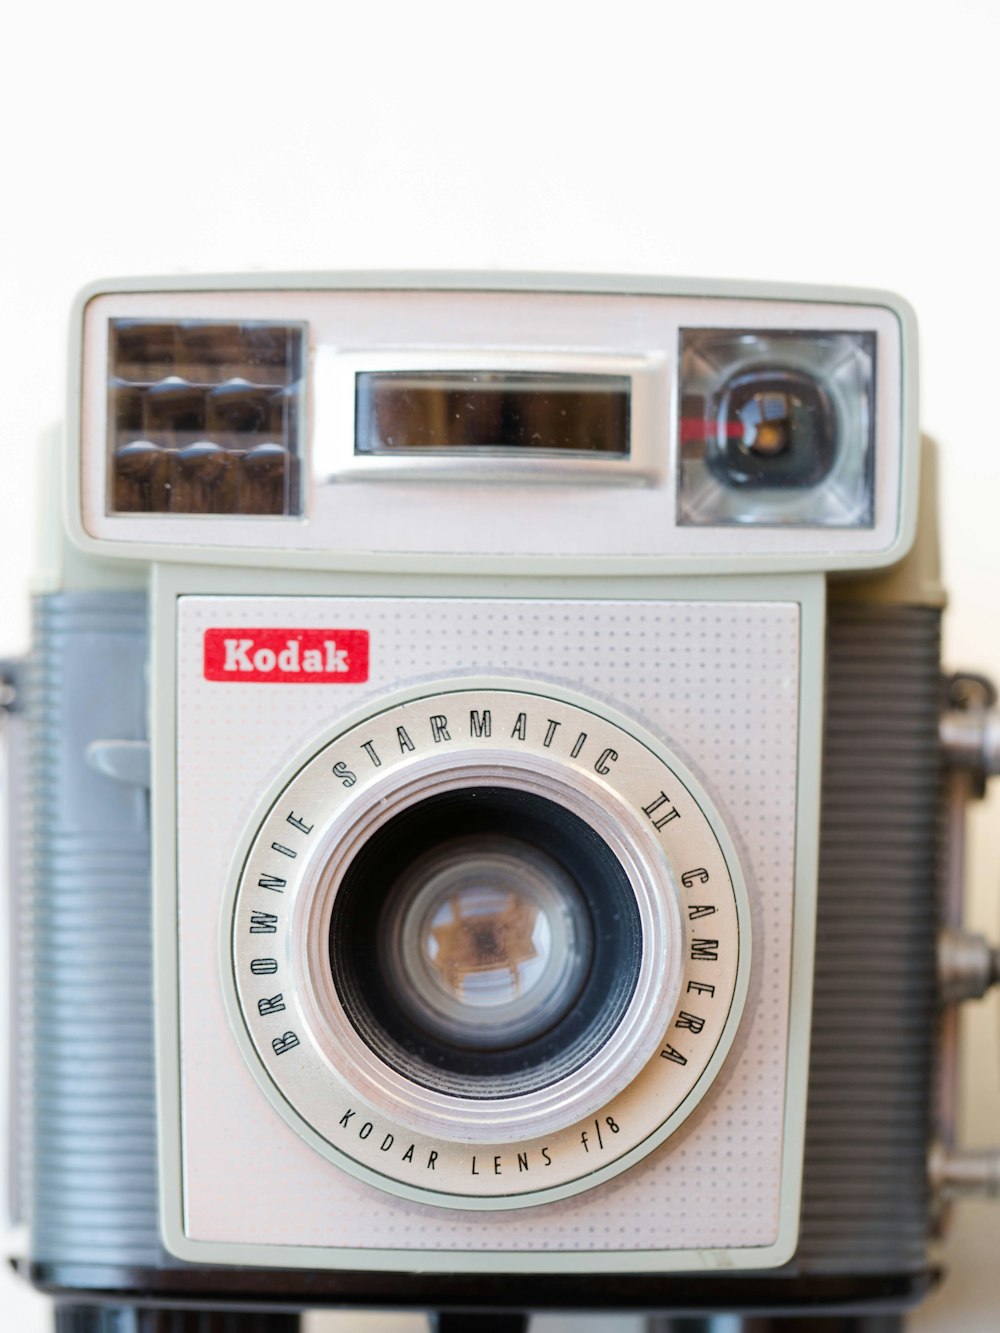 white Kodak starmatic camera